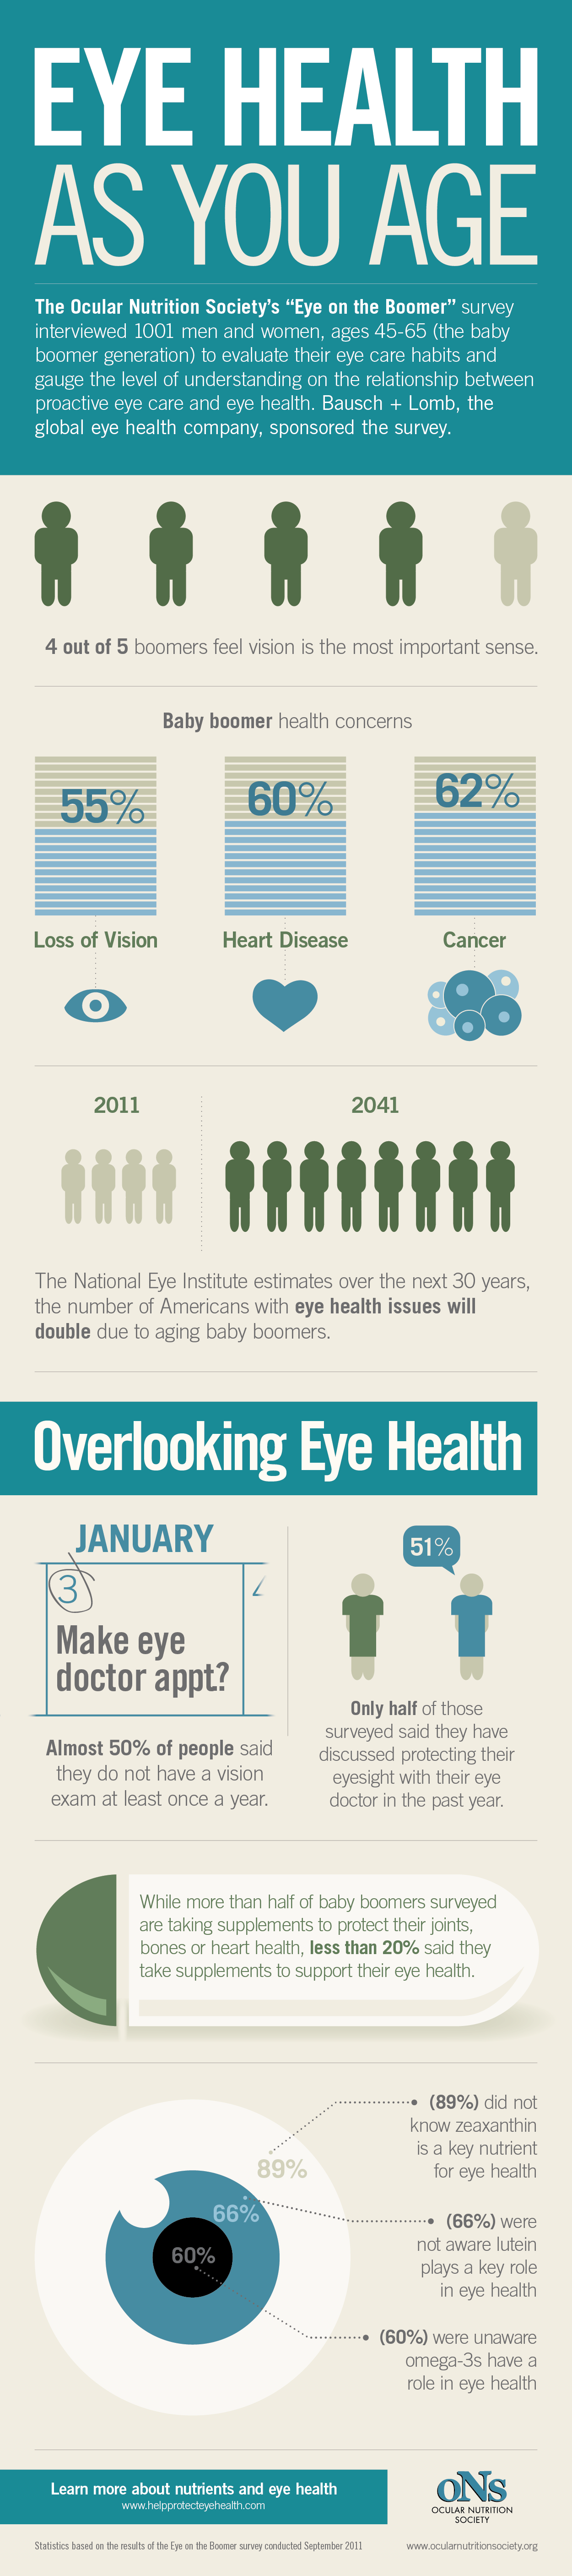 Guide to Eye Health